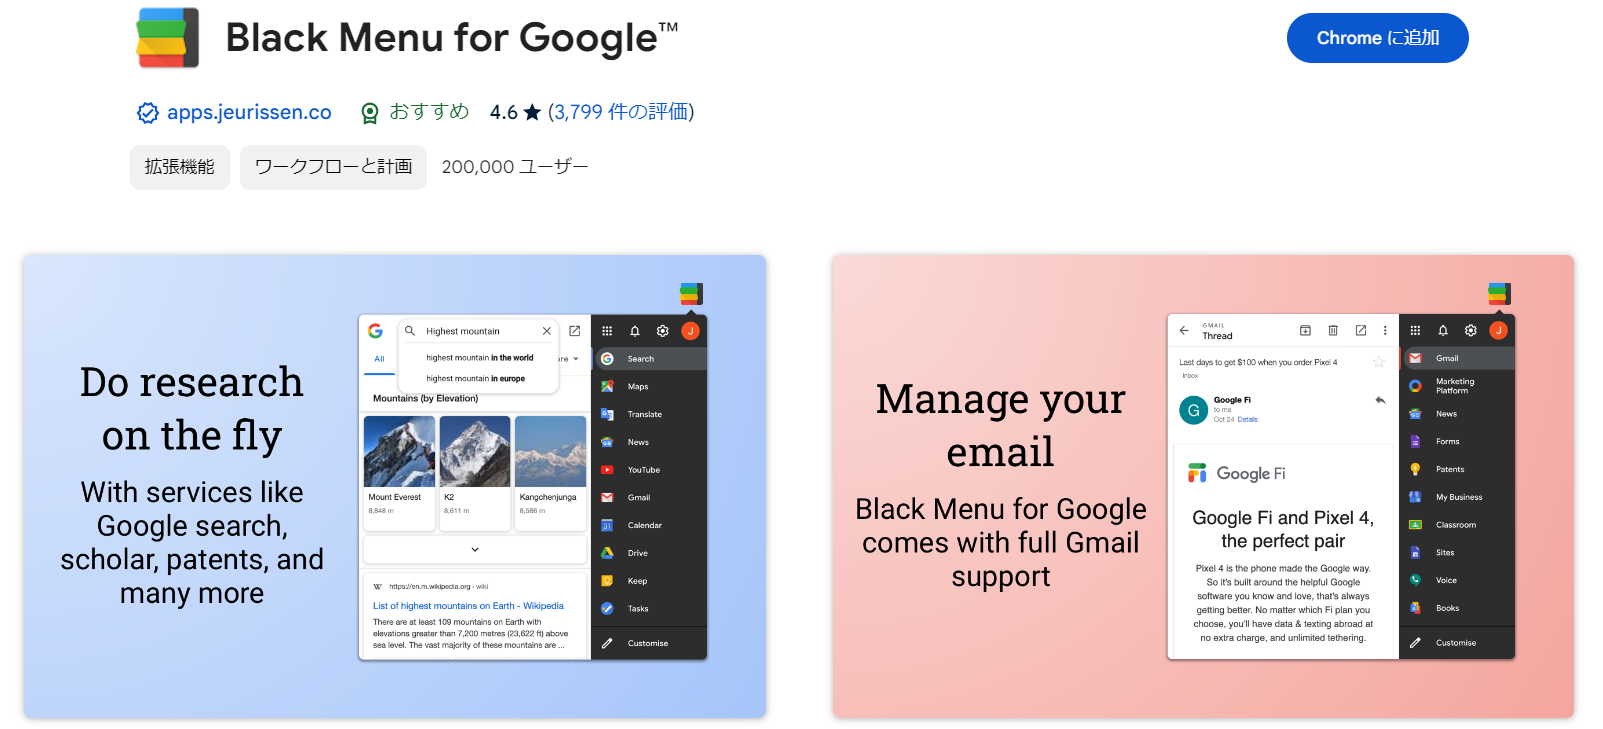 Black Menu for Google